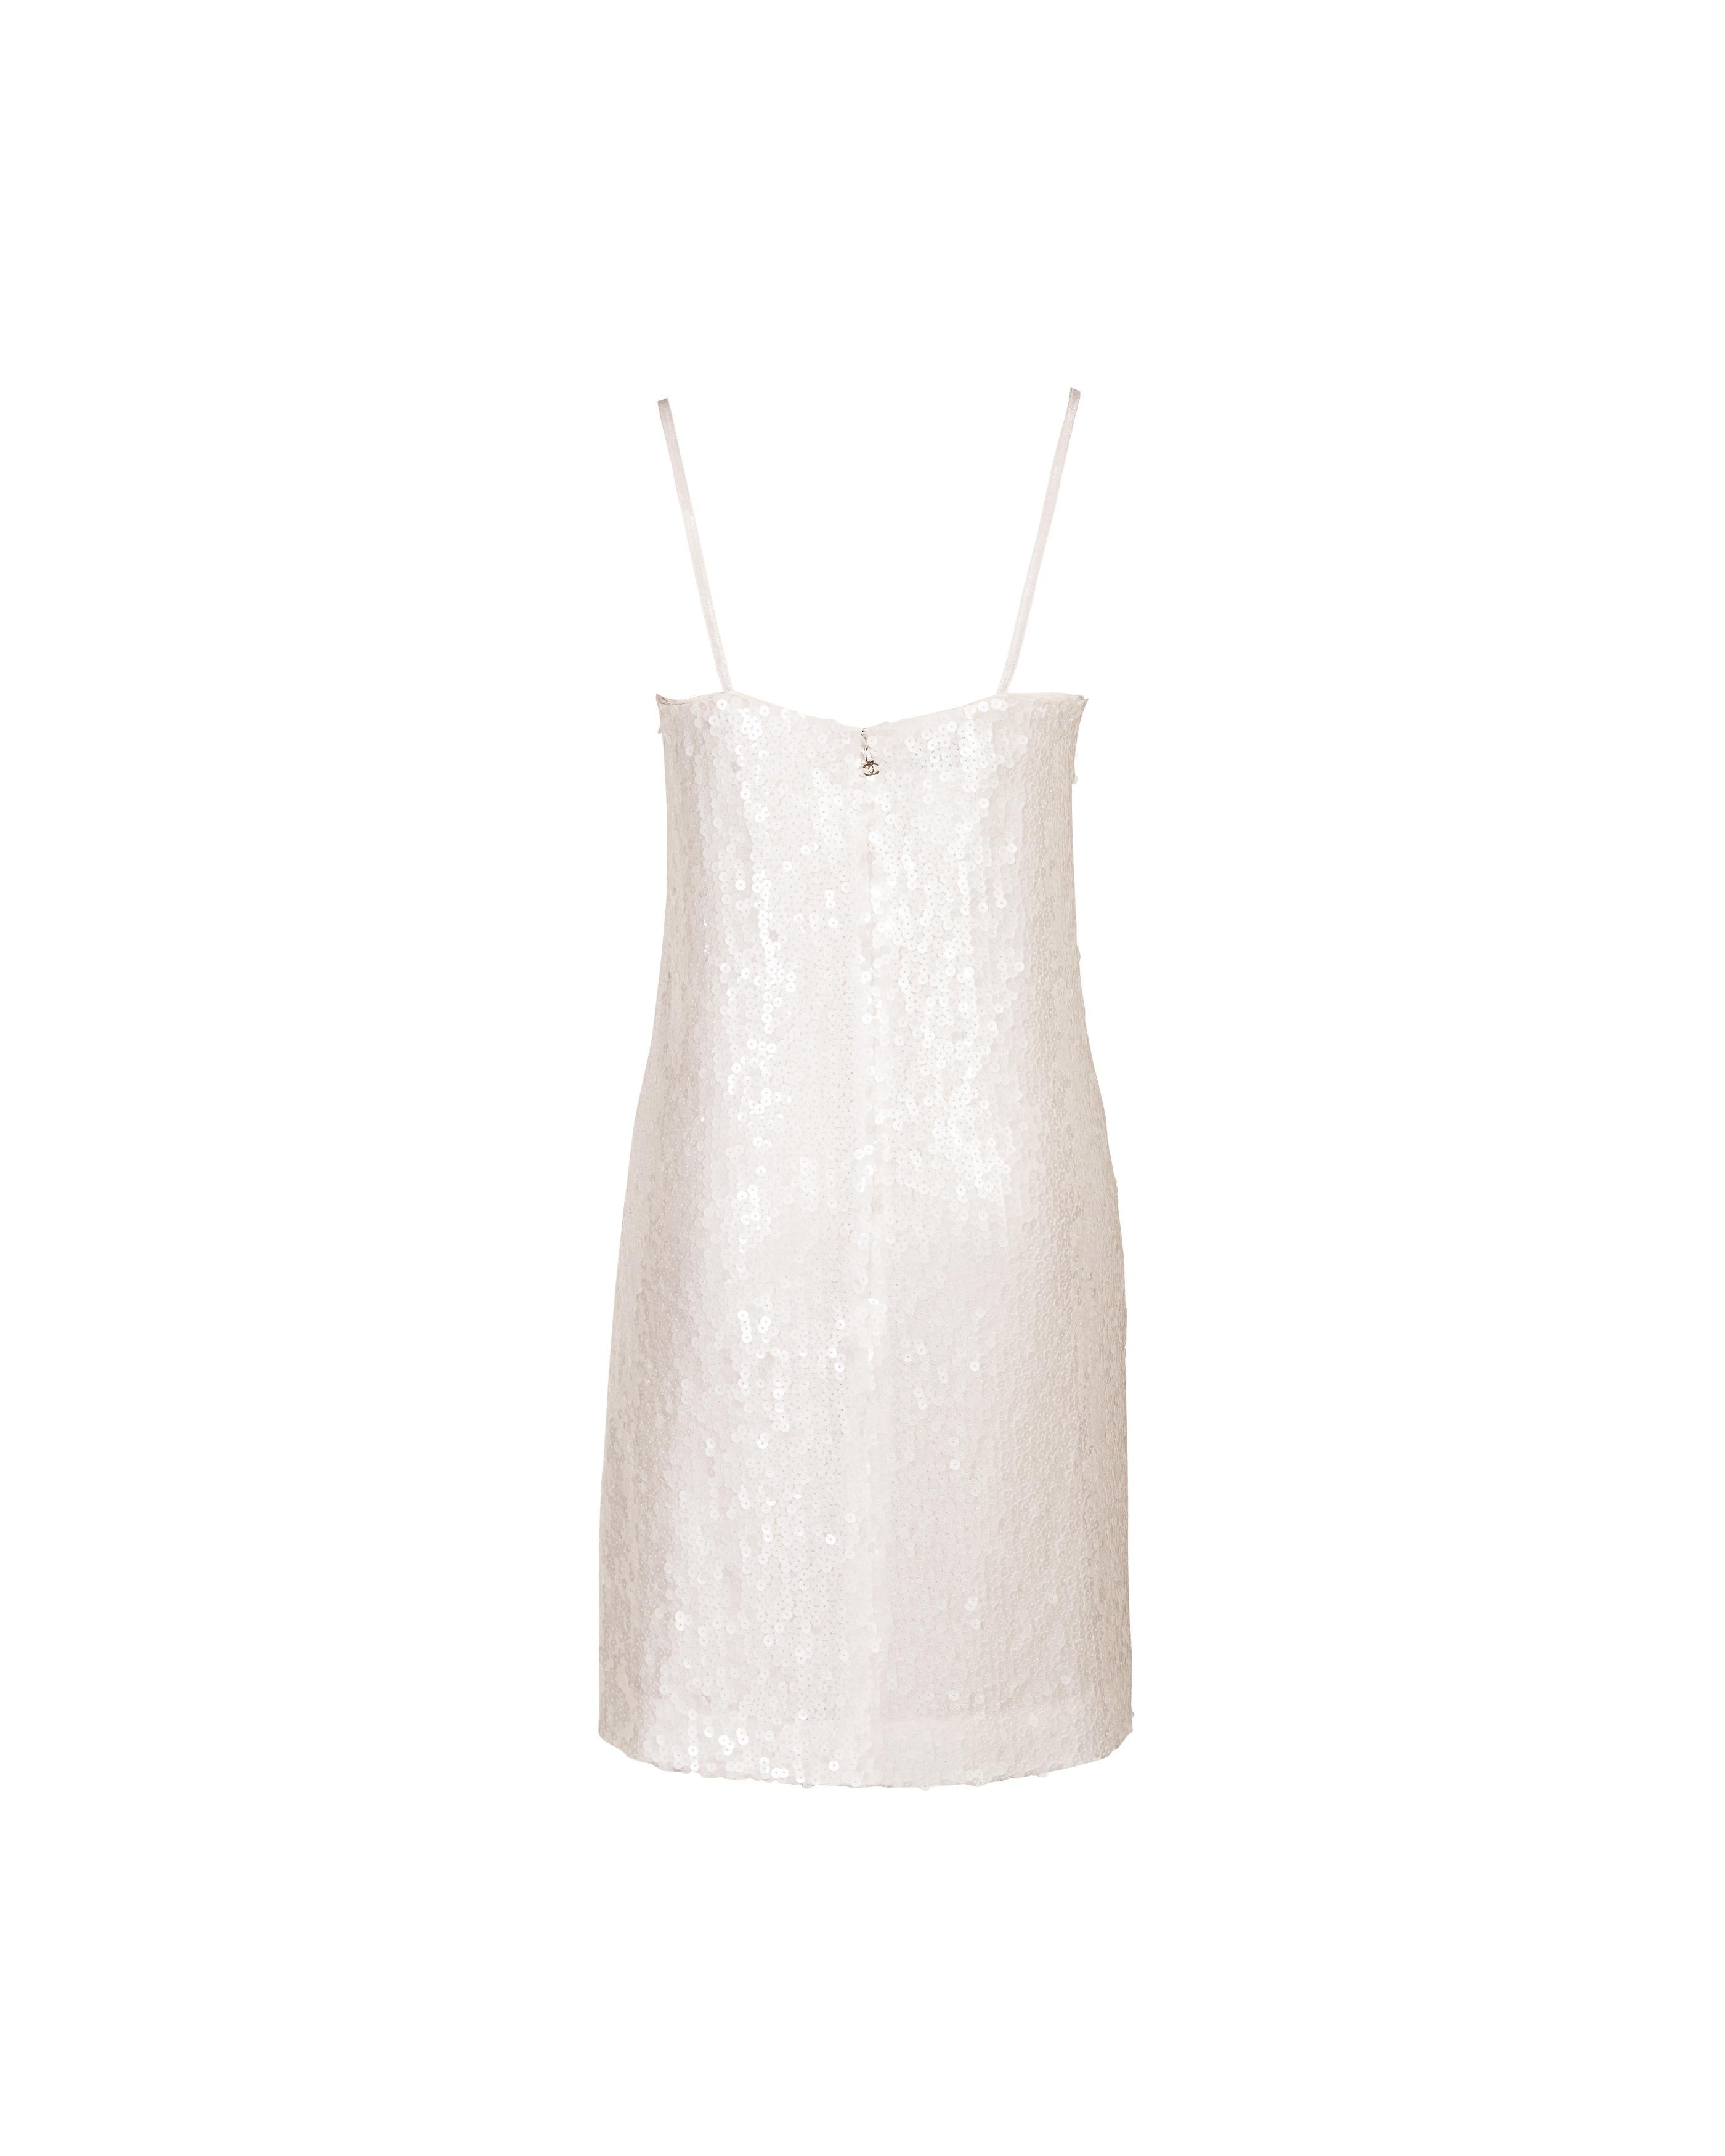 white sparkly midi dress